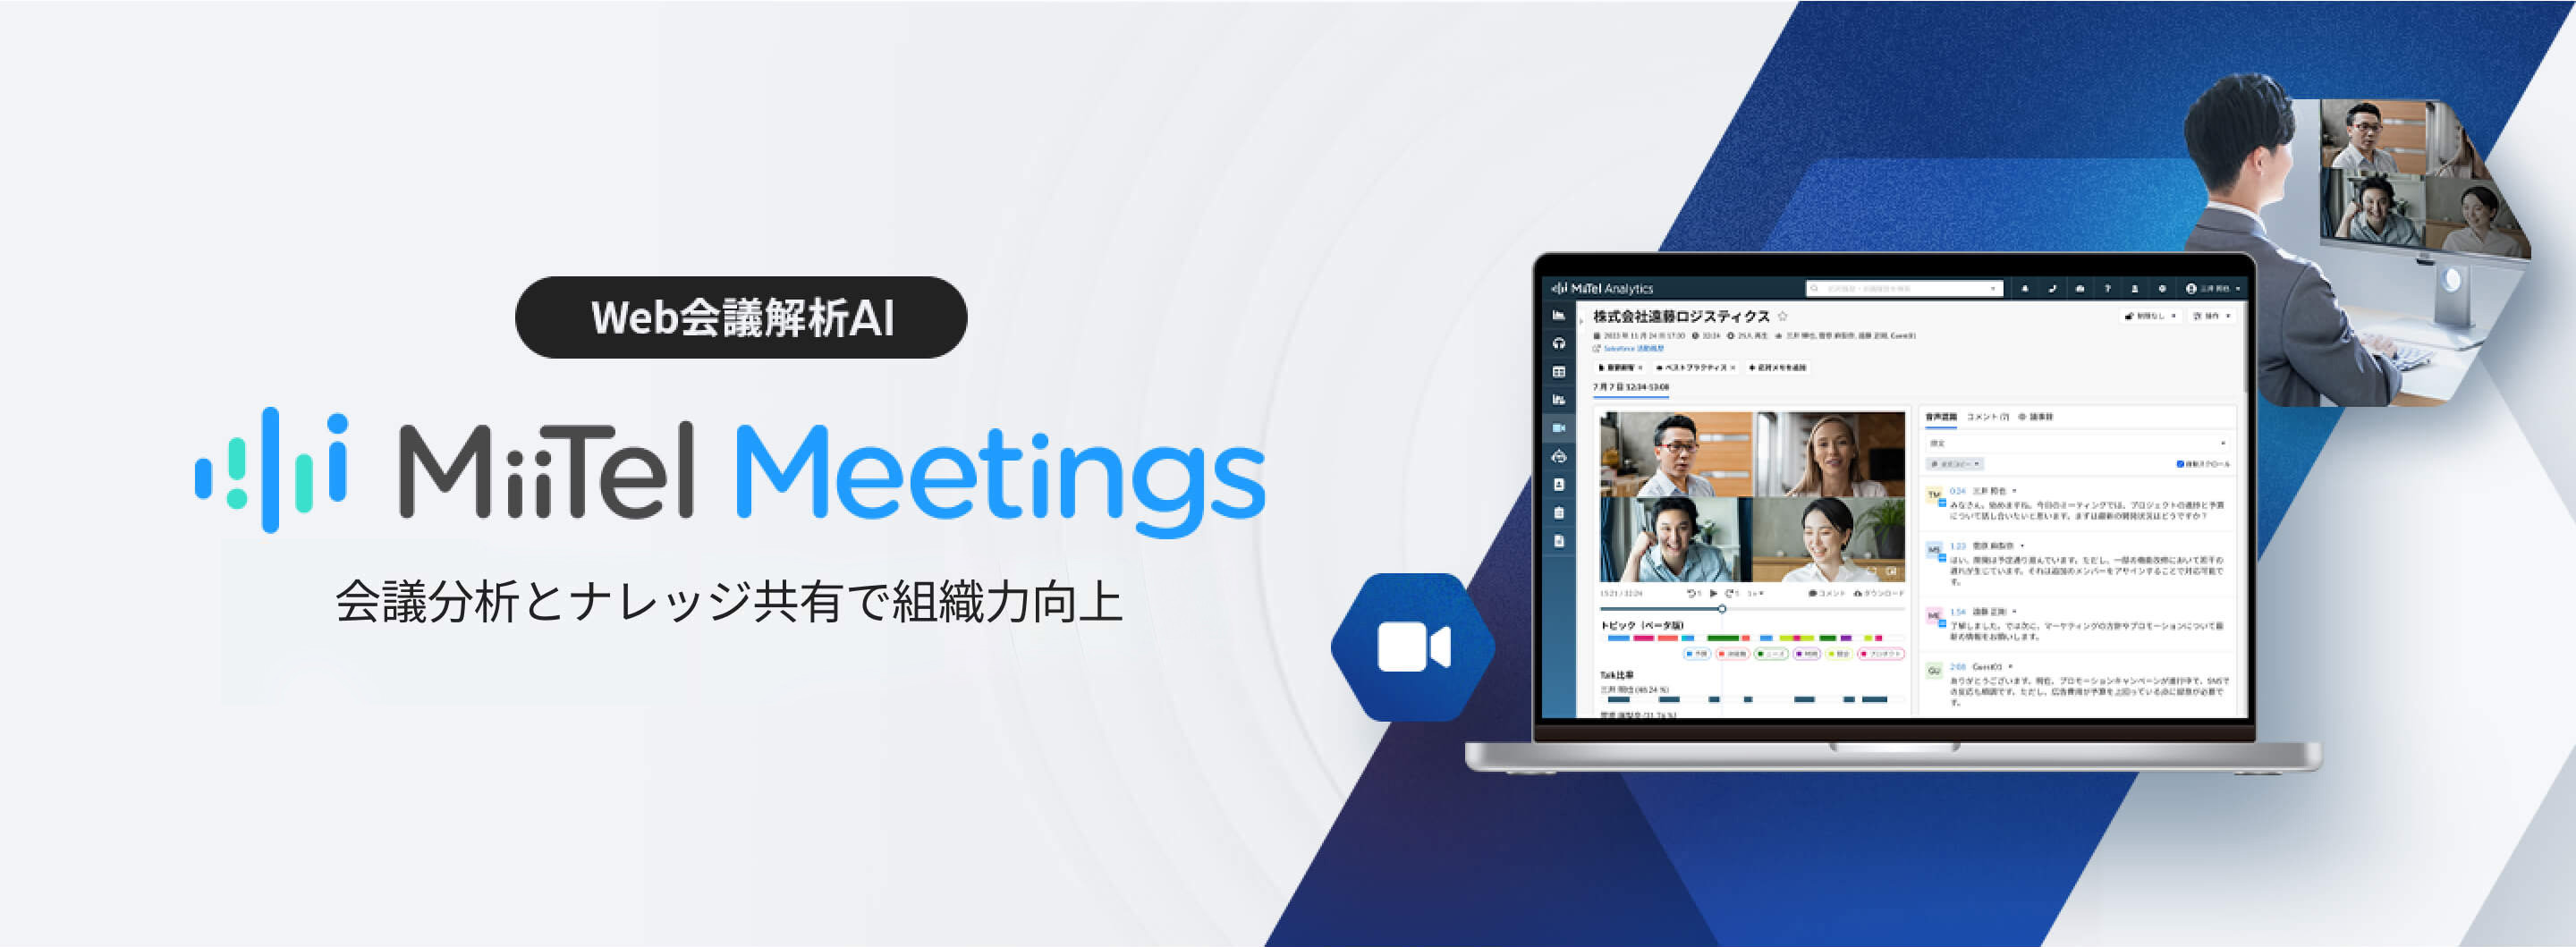 Web会議解析AIサービス MiiTel Meetings